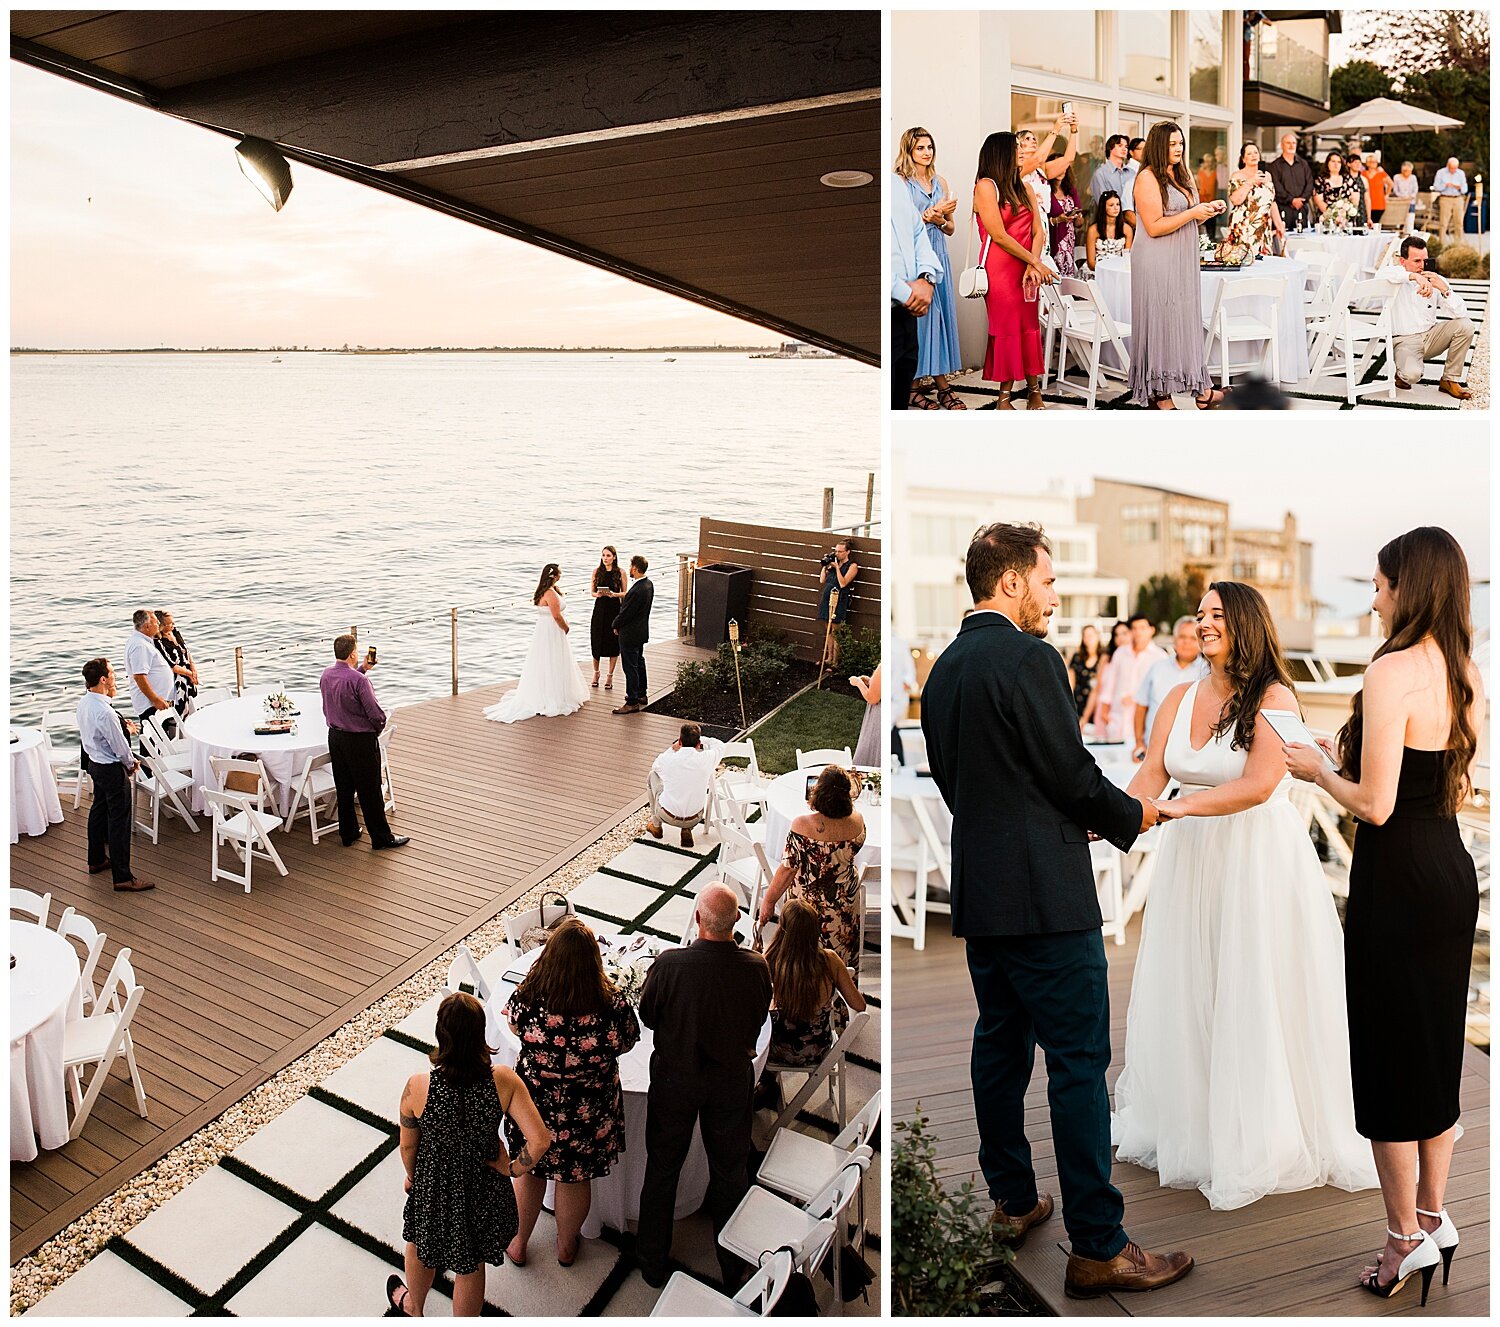 Backyard-Wedding-Waterfront-Ocean-Long-Island-NY-Photography-39.jpg